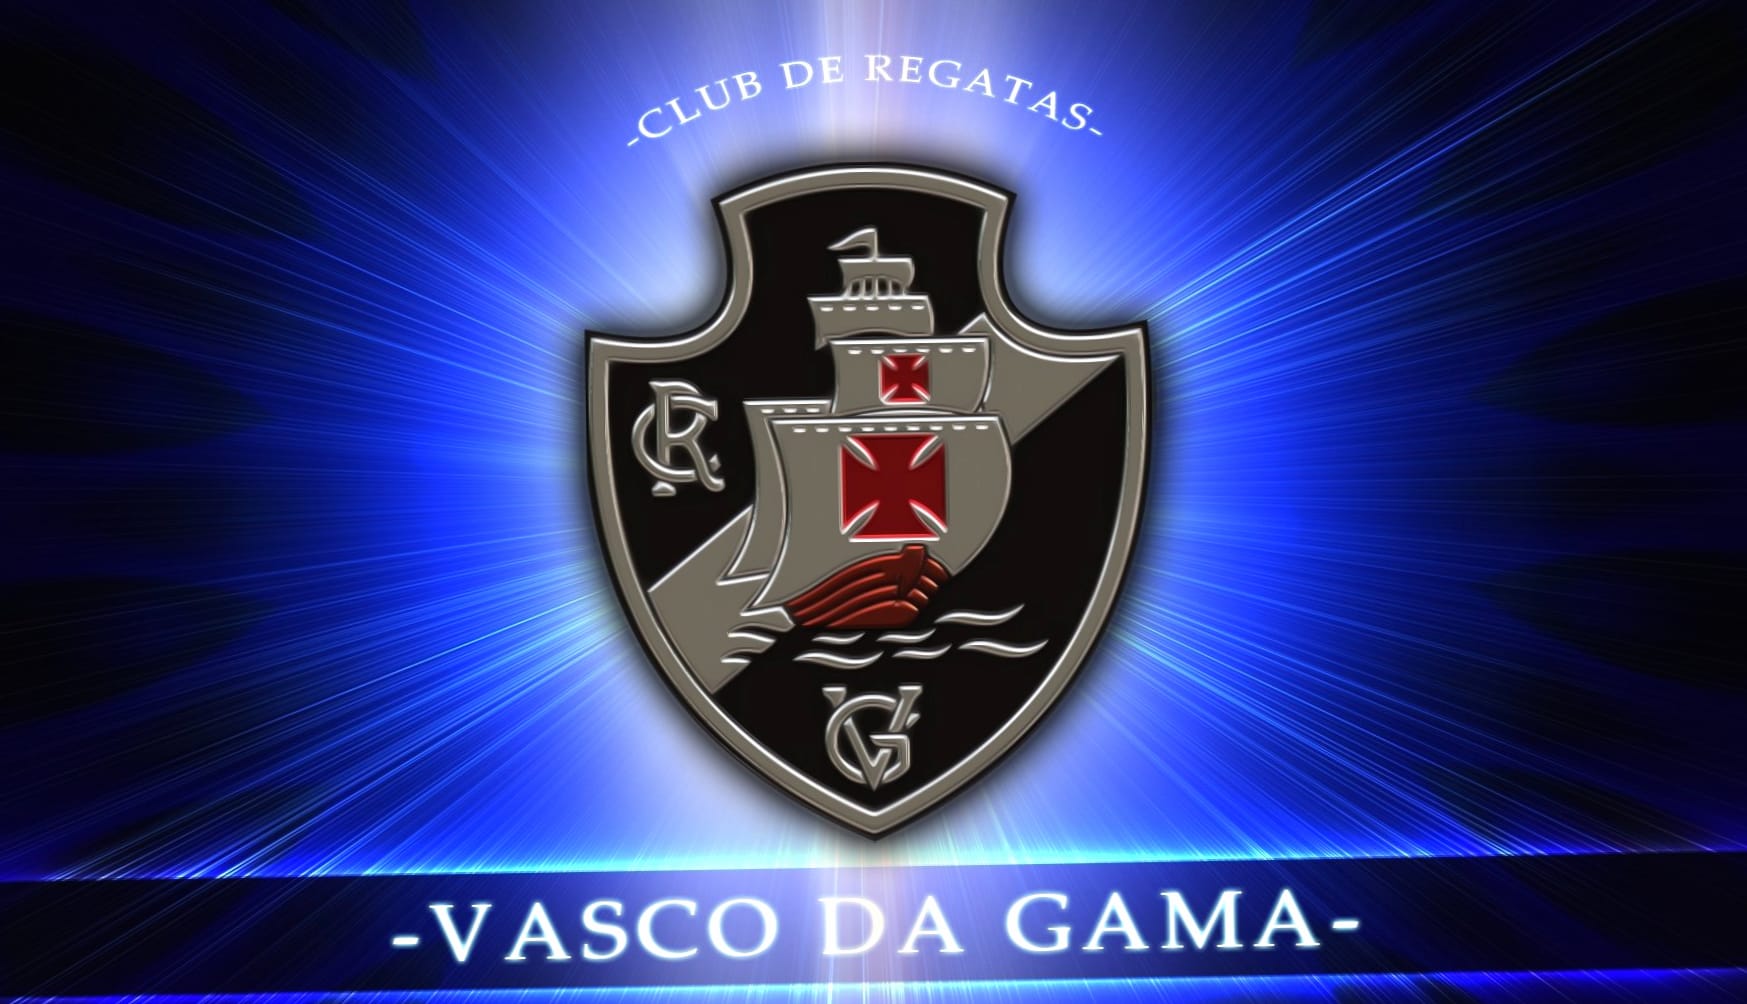 CR Vasco da Gama at 1024 x 1024 iPad size wallpapers HD quality